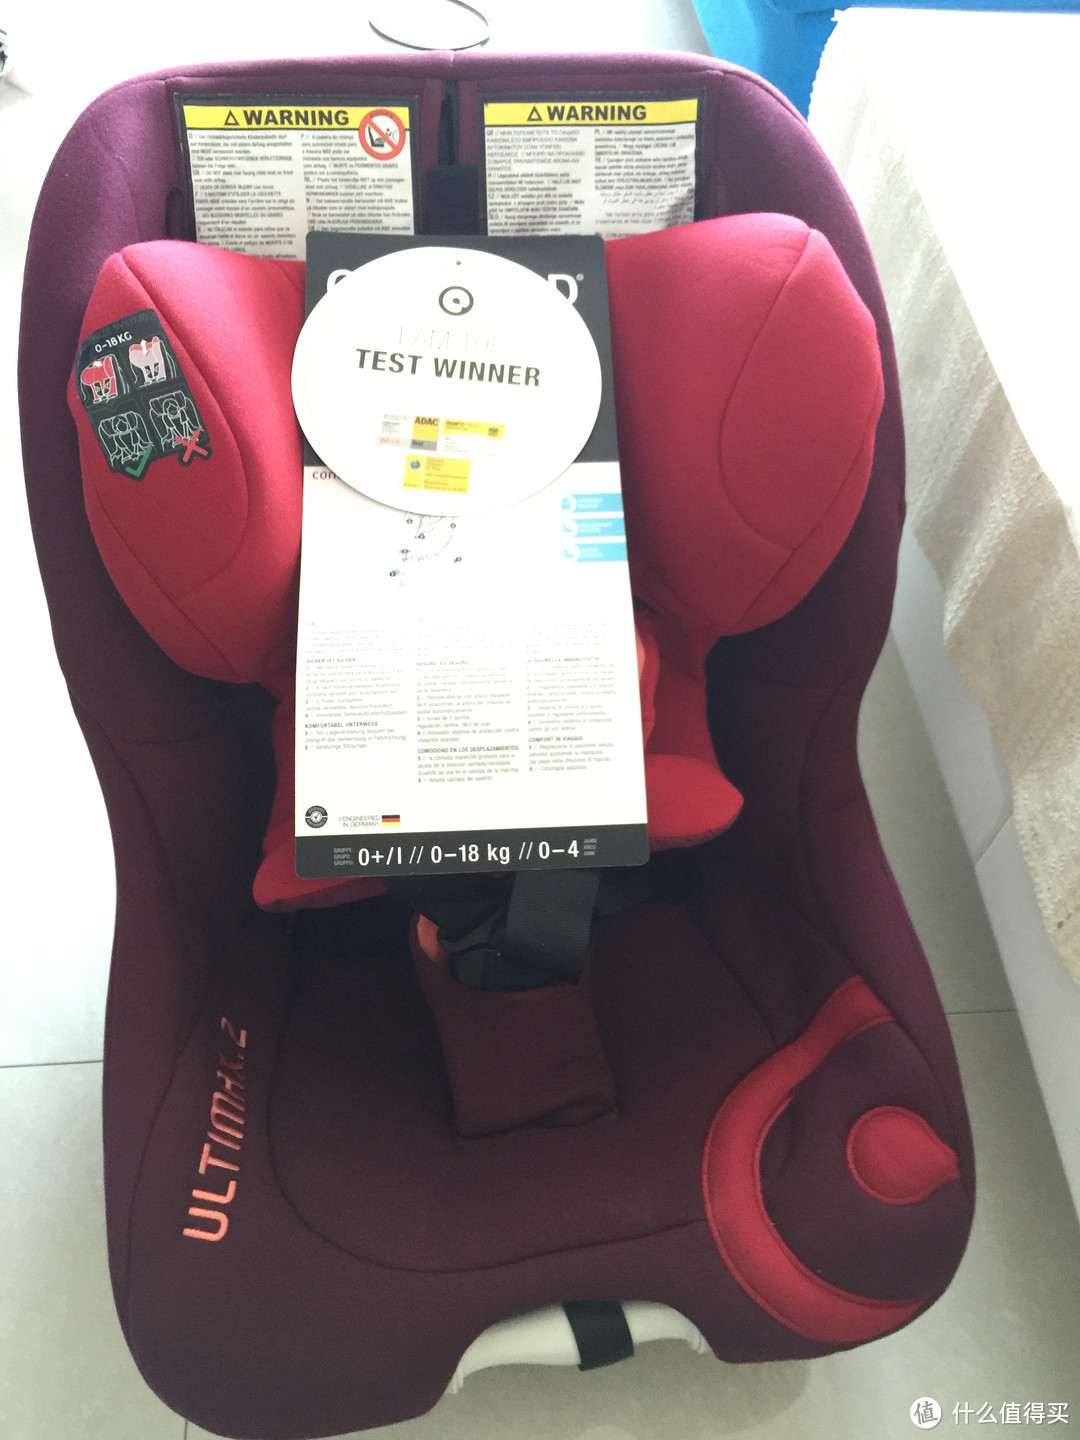 CONCORD 安全座椅 Ultimax2的惊喜与吐槽